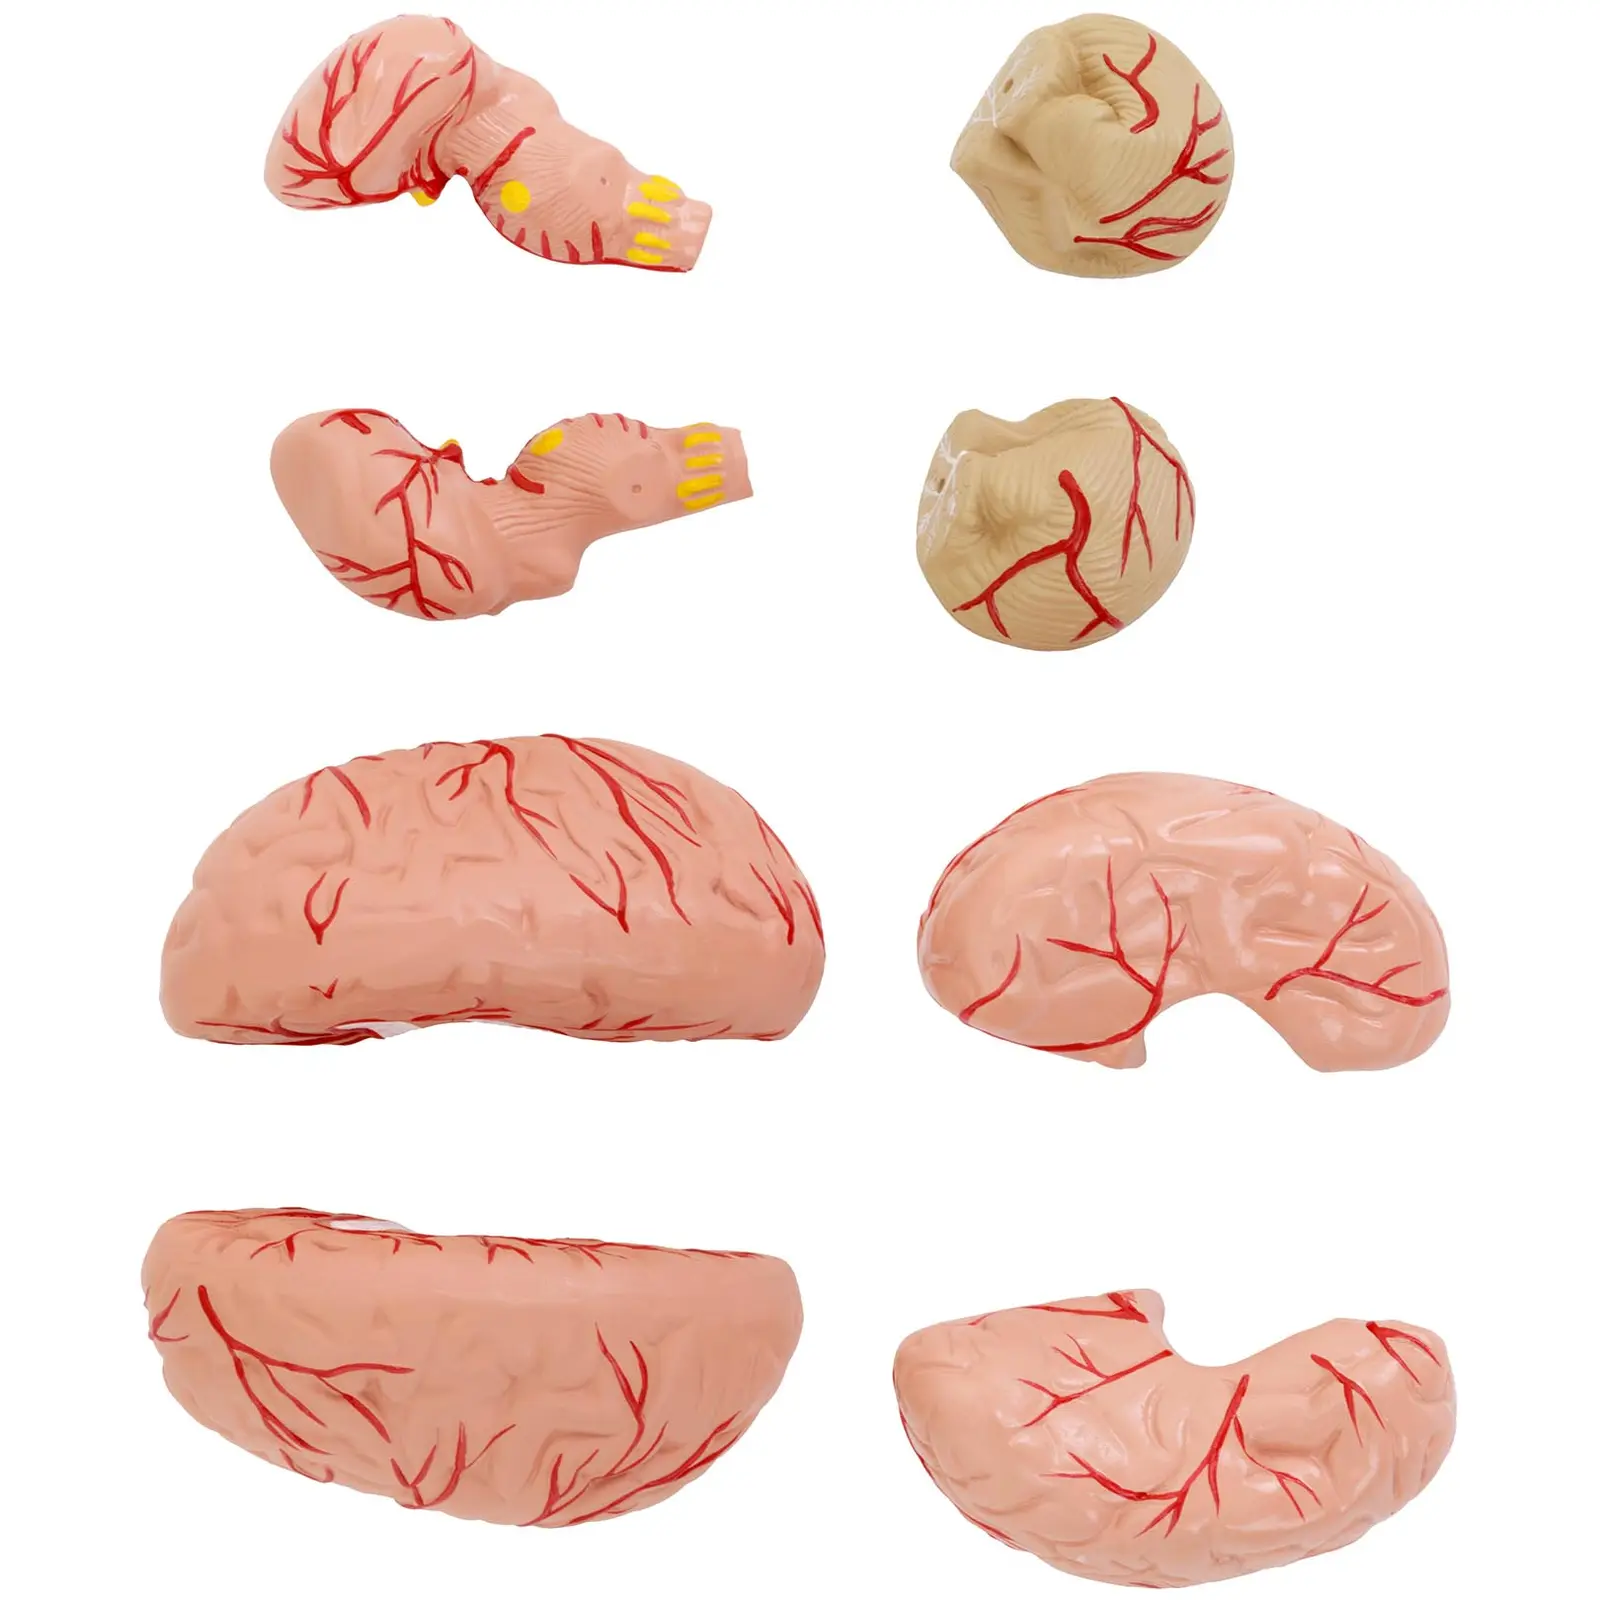 Crânio humano - cérebro - modelo anatómico